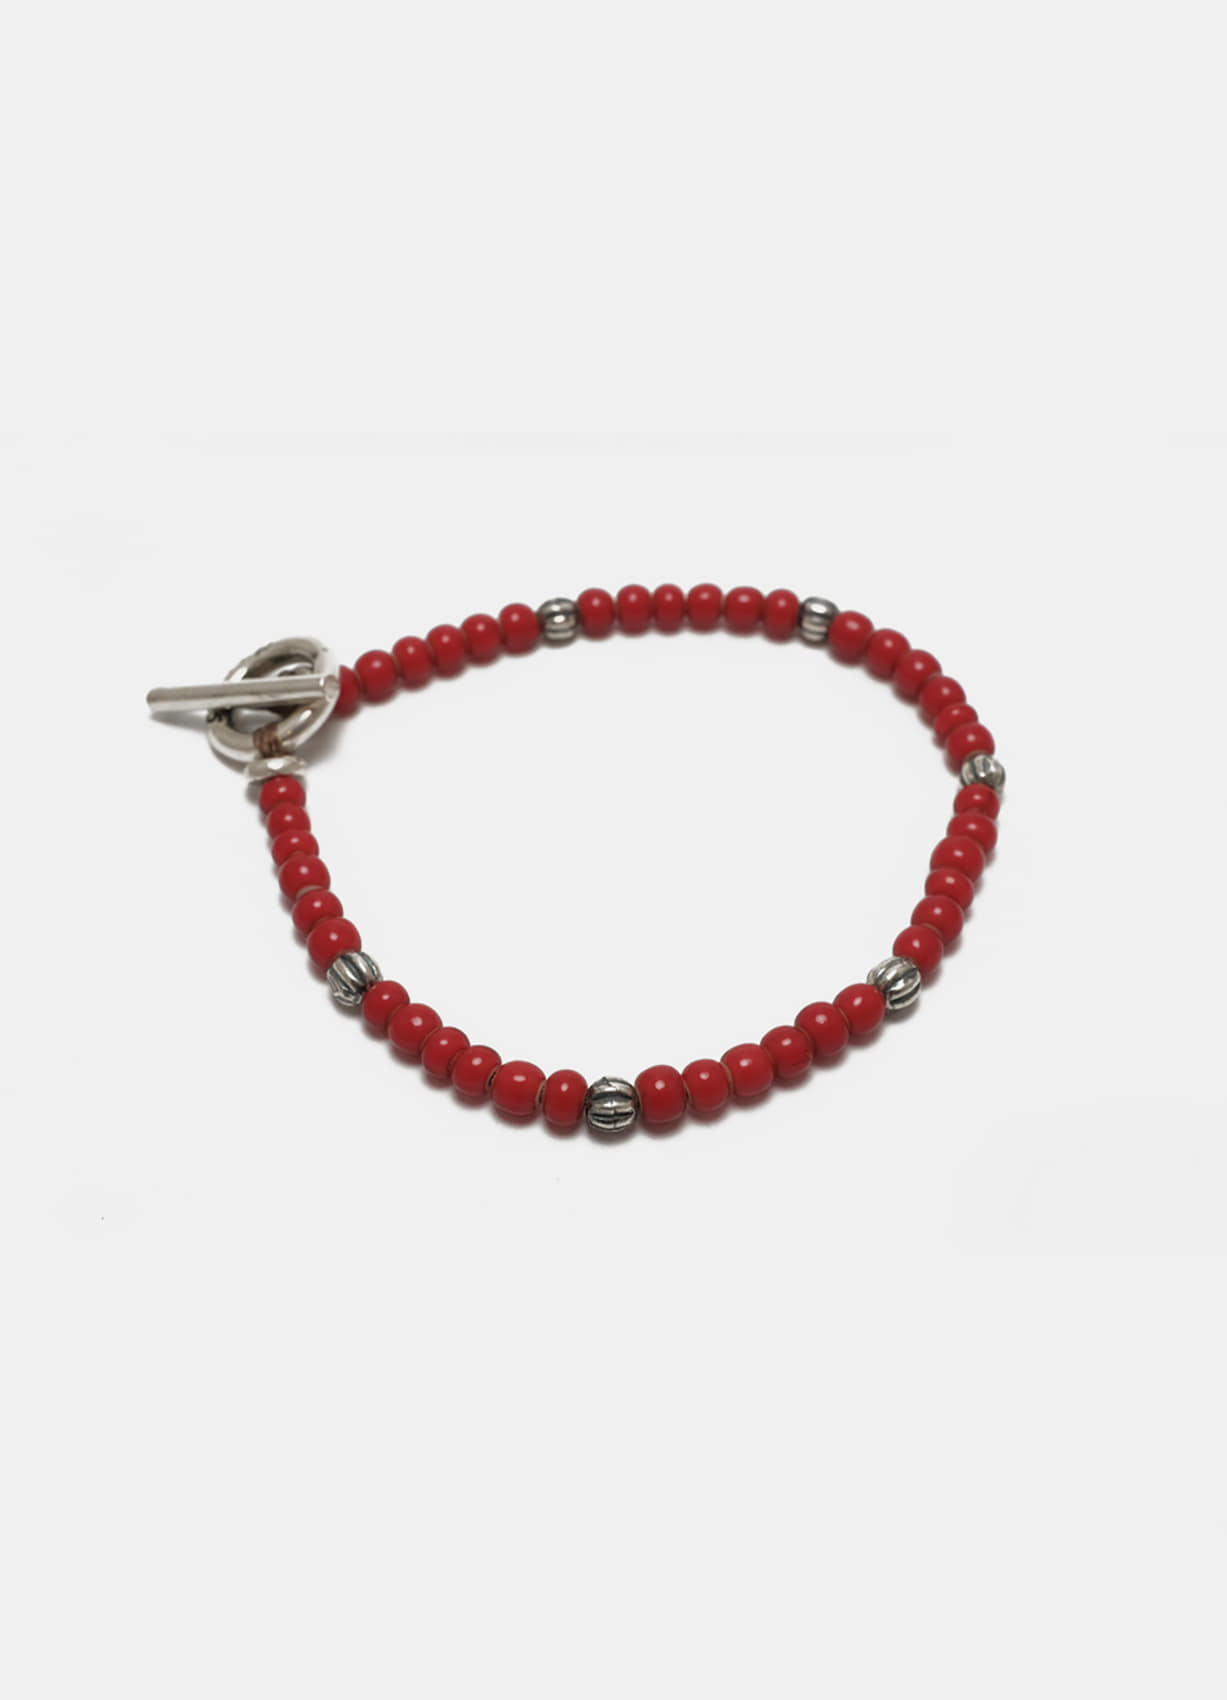 [fluid] red beads bracelet